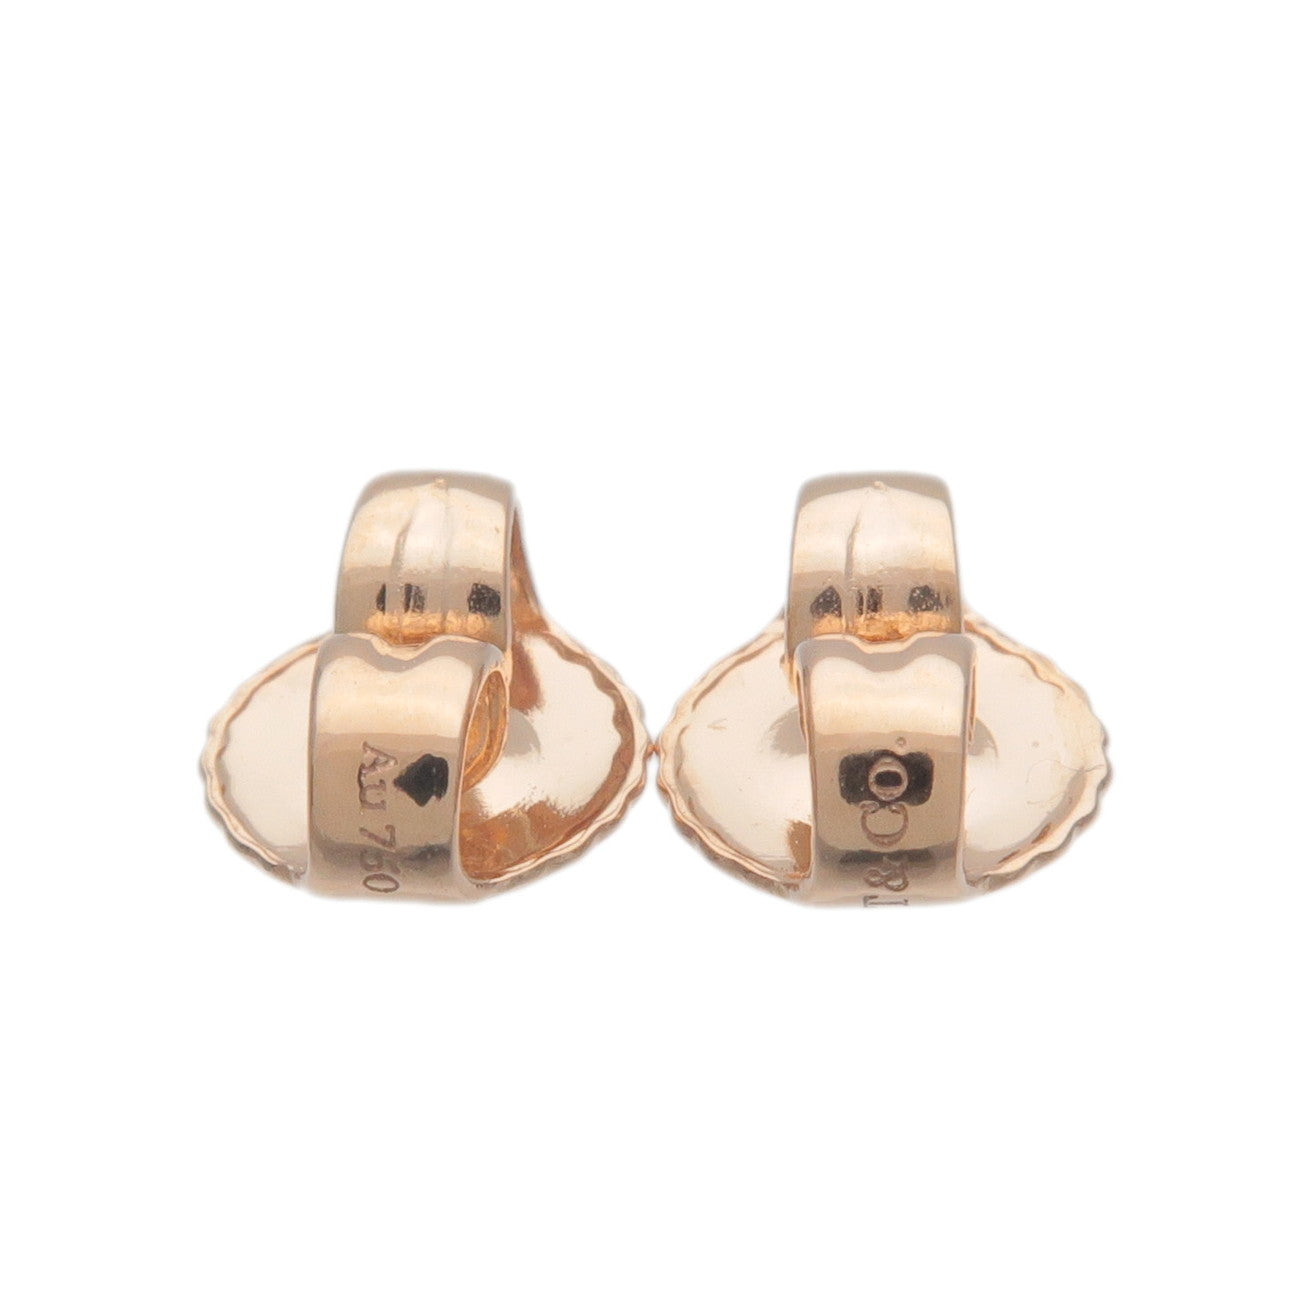 Tiffany&Co. By the Yard Diamond Earrings 0.06ct K18 Rose Gold